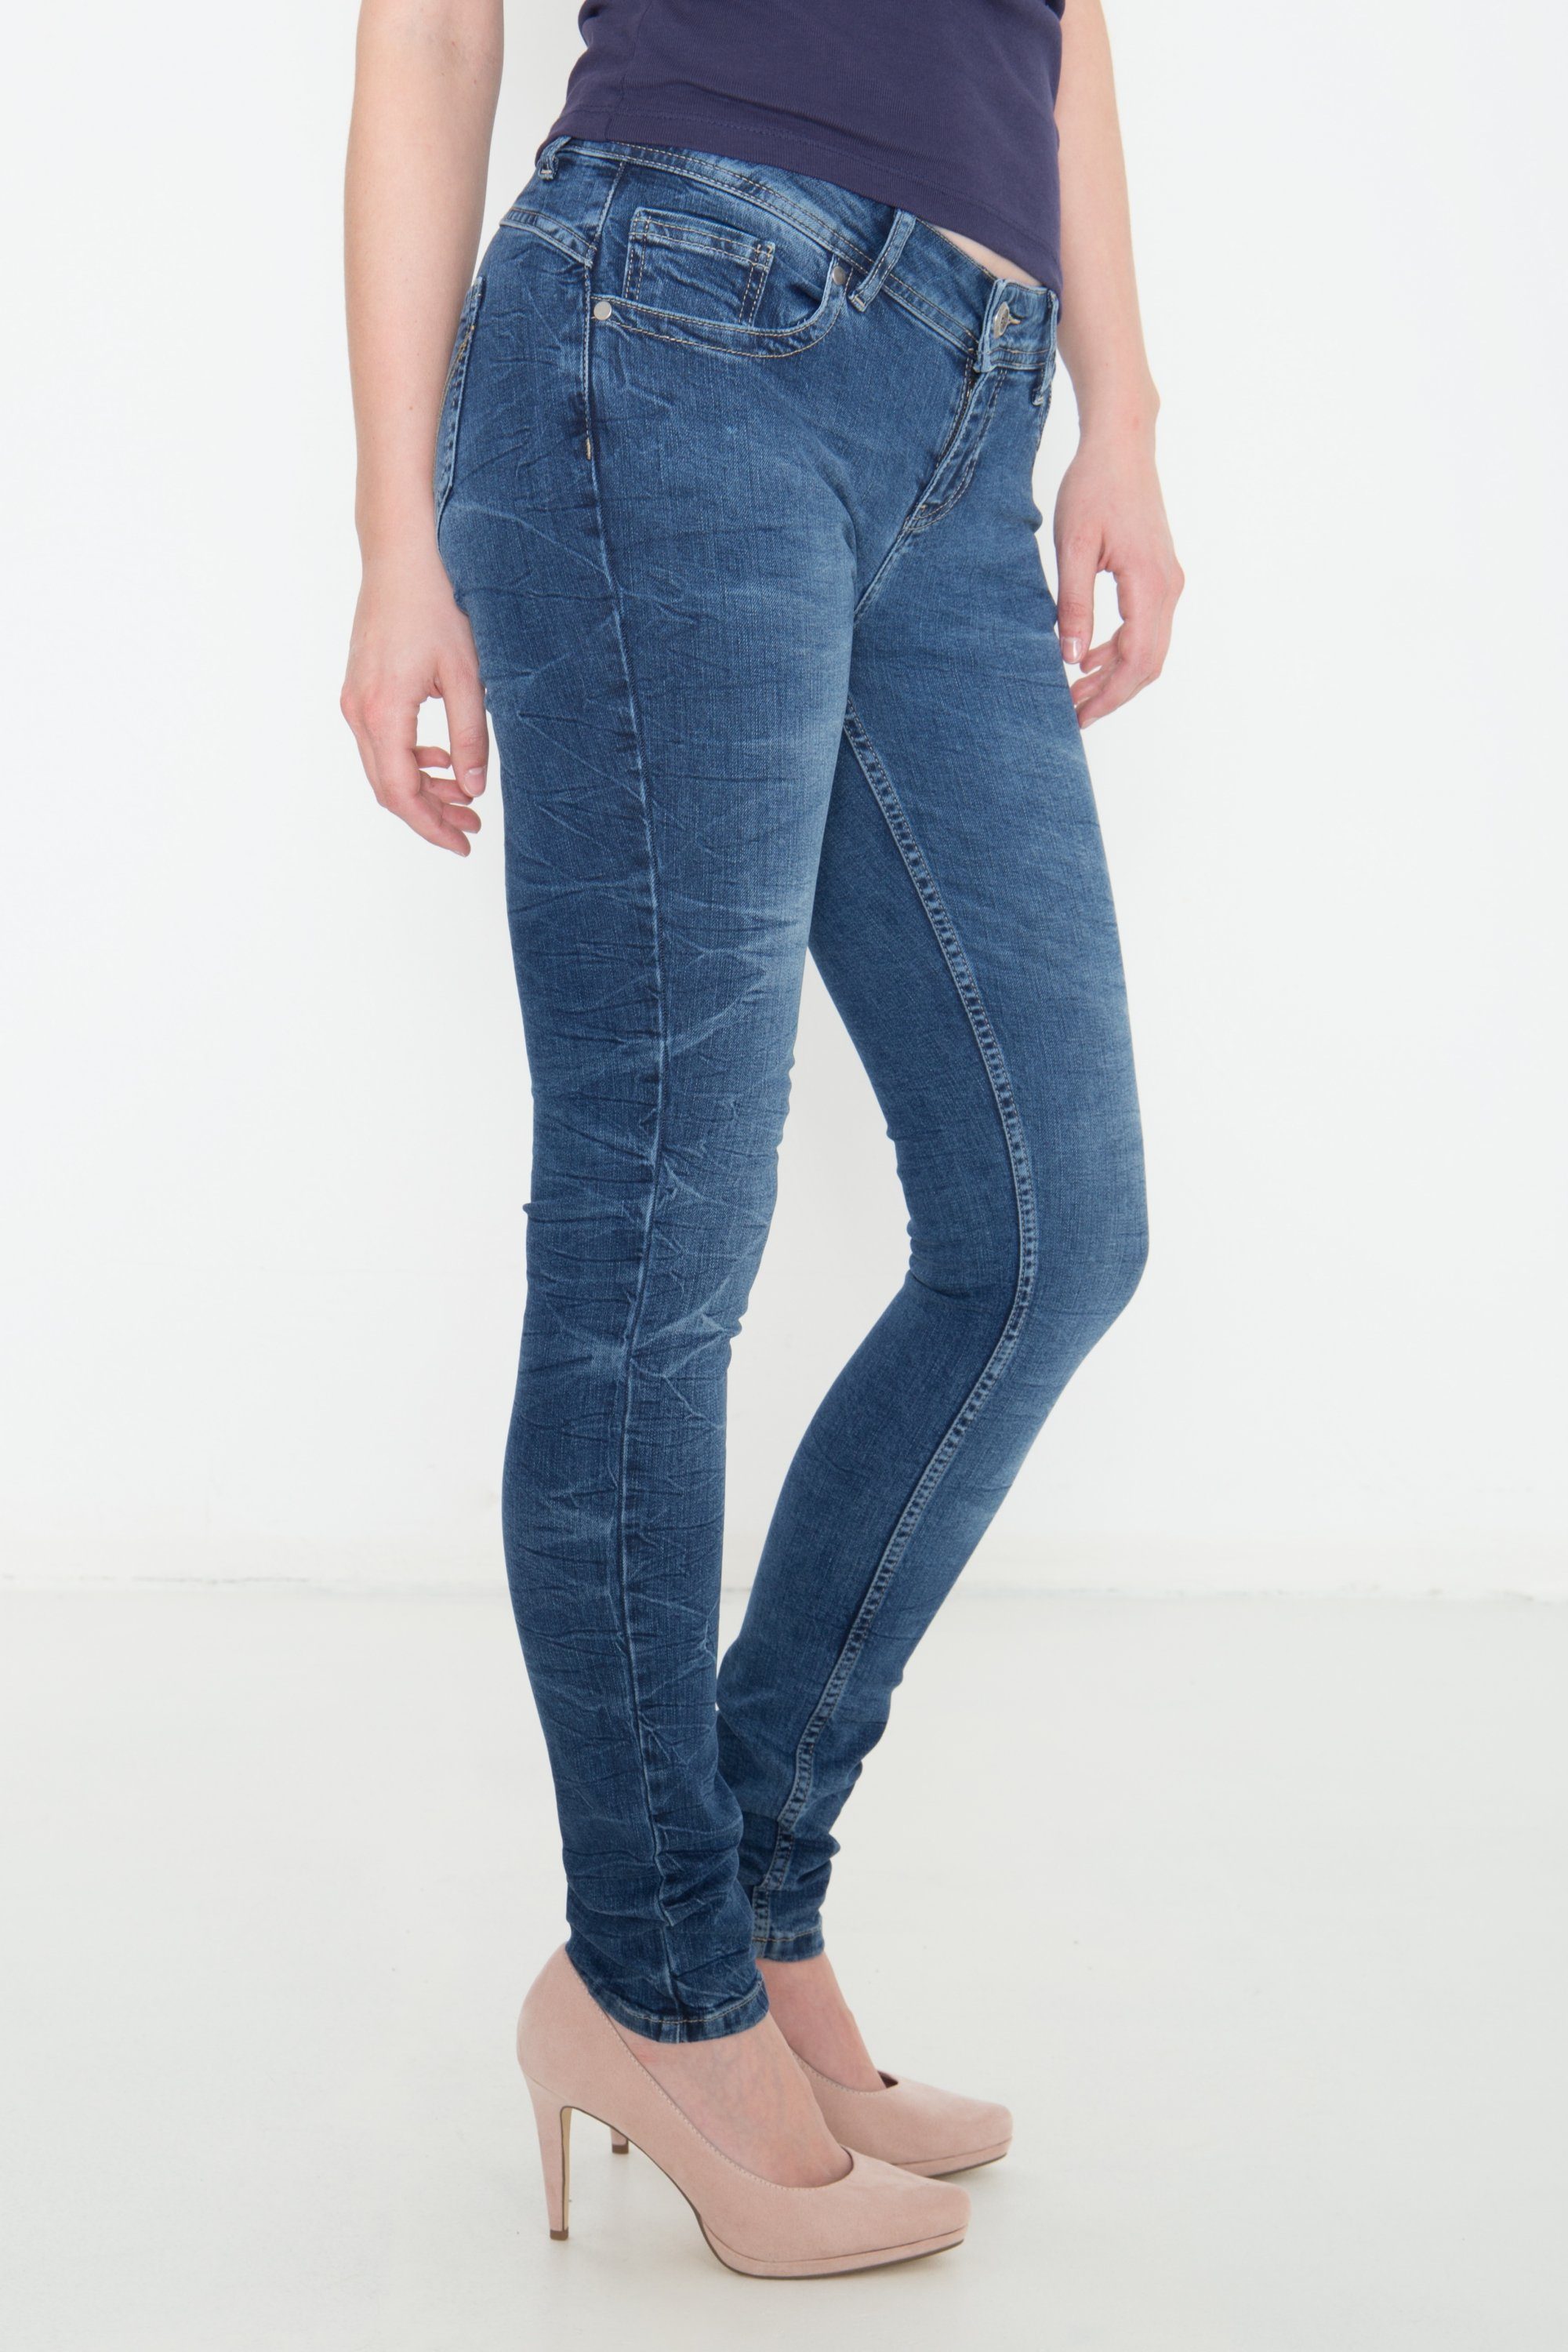 Damen Jeans Way of Glory 5-Pocket-Jeans Maria 5-pocket Basic Design in individueller Waschung